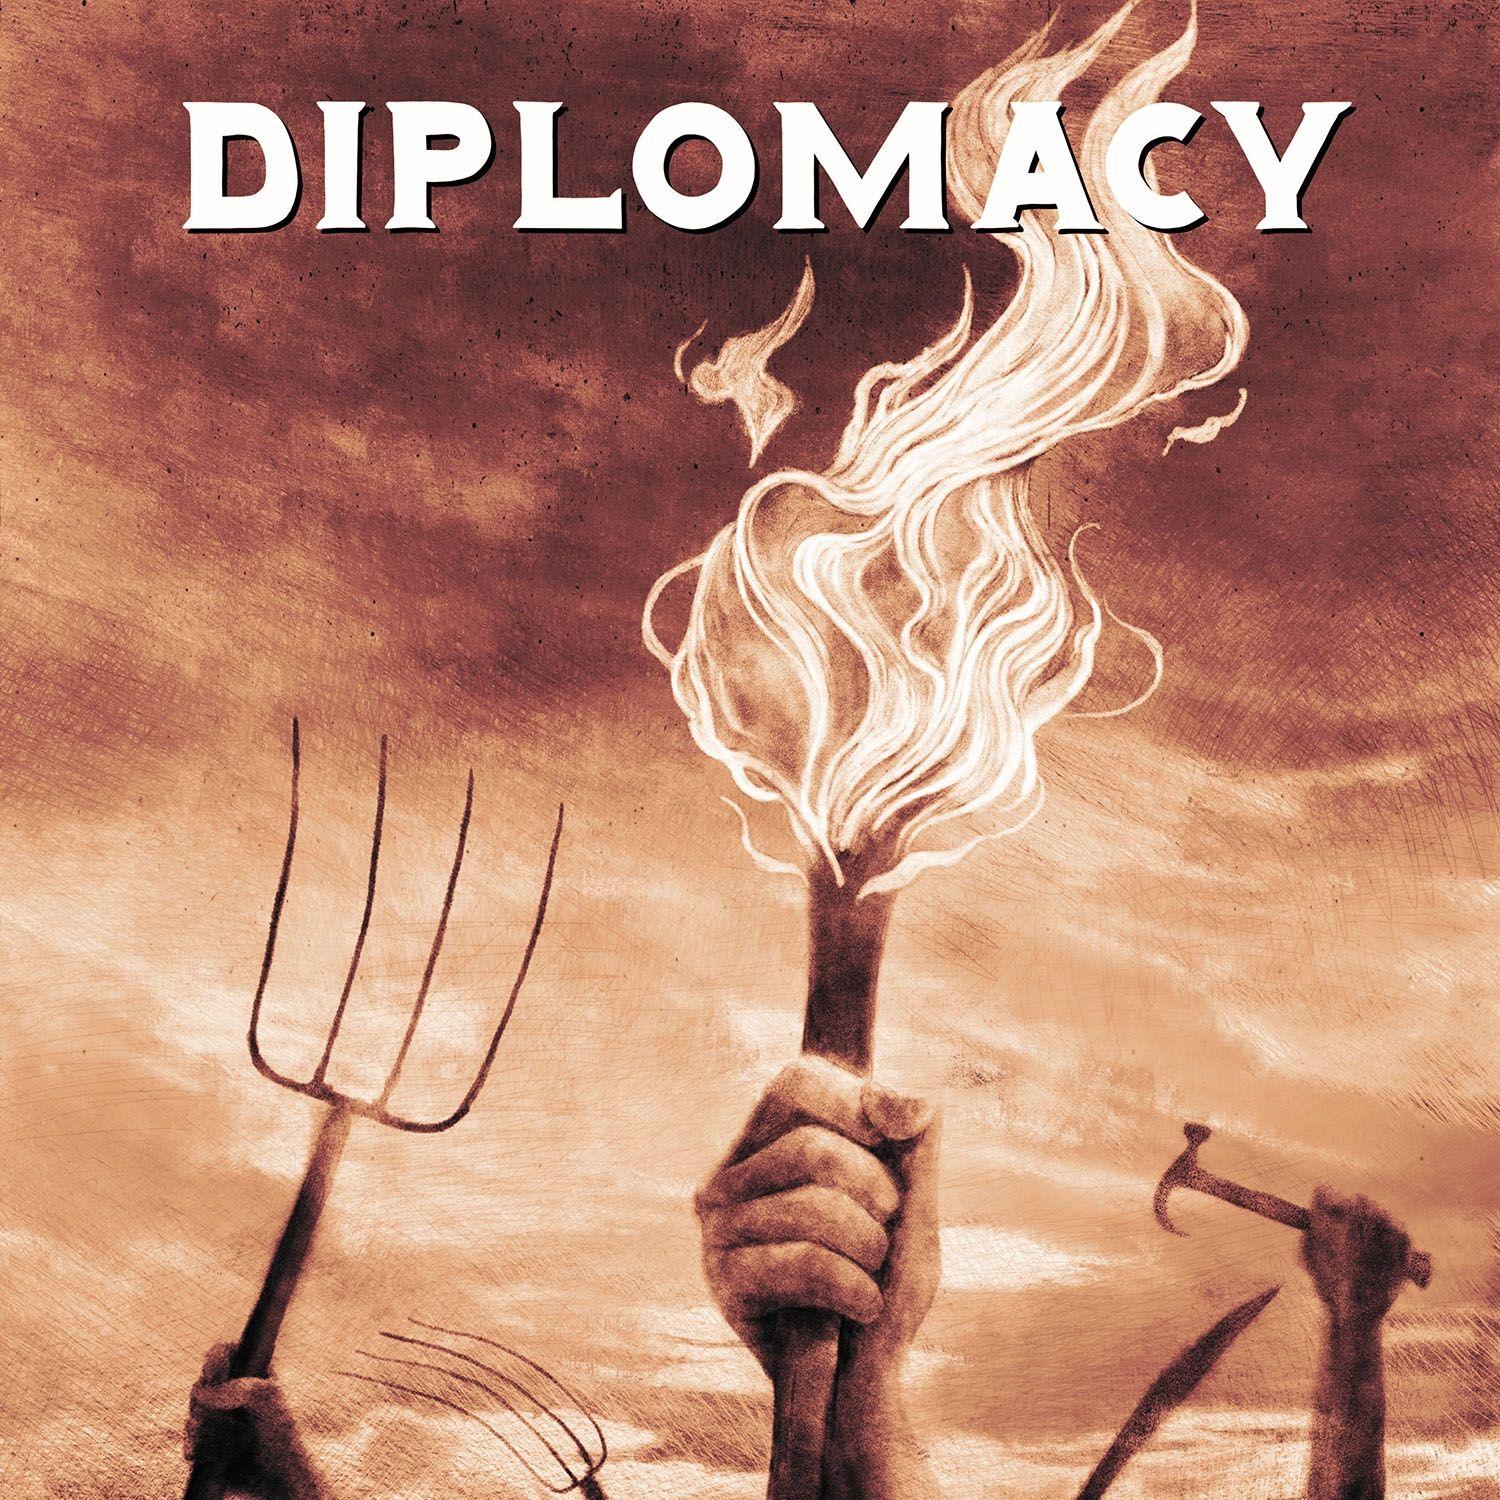 Thumbnail for "228 - Diplomacy".